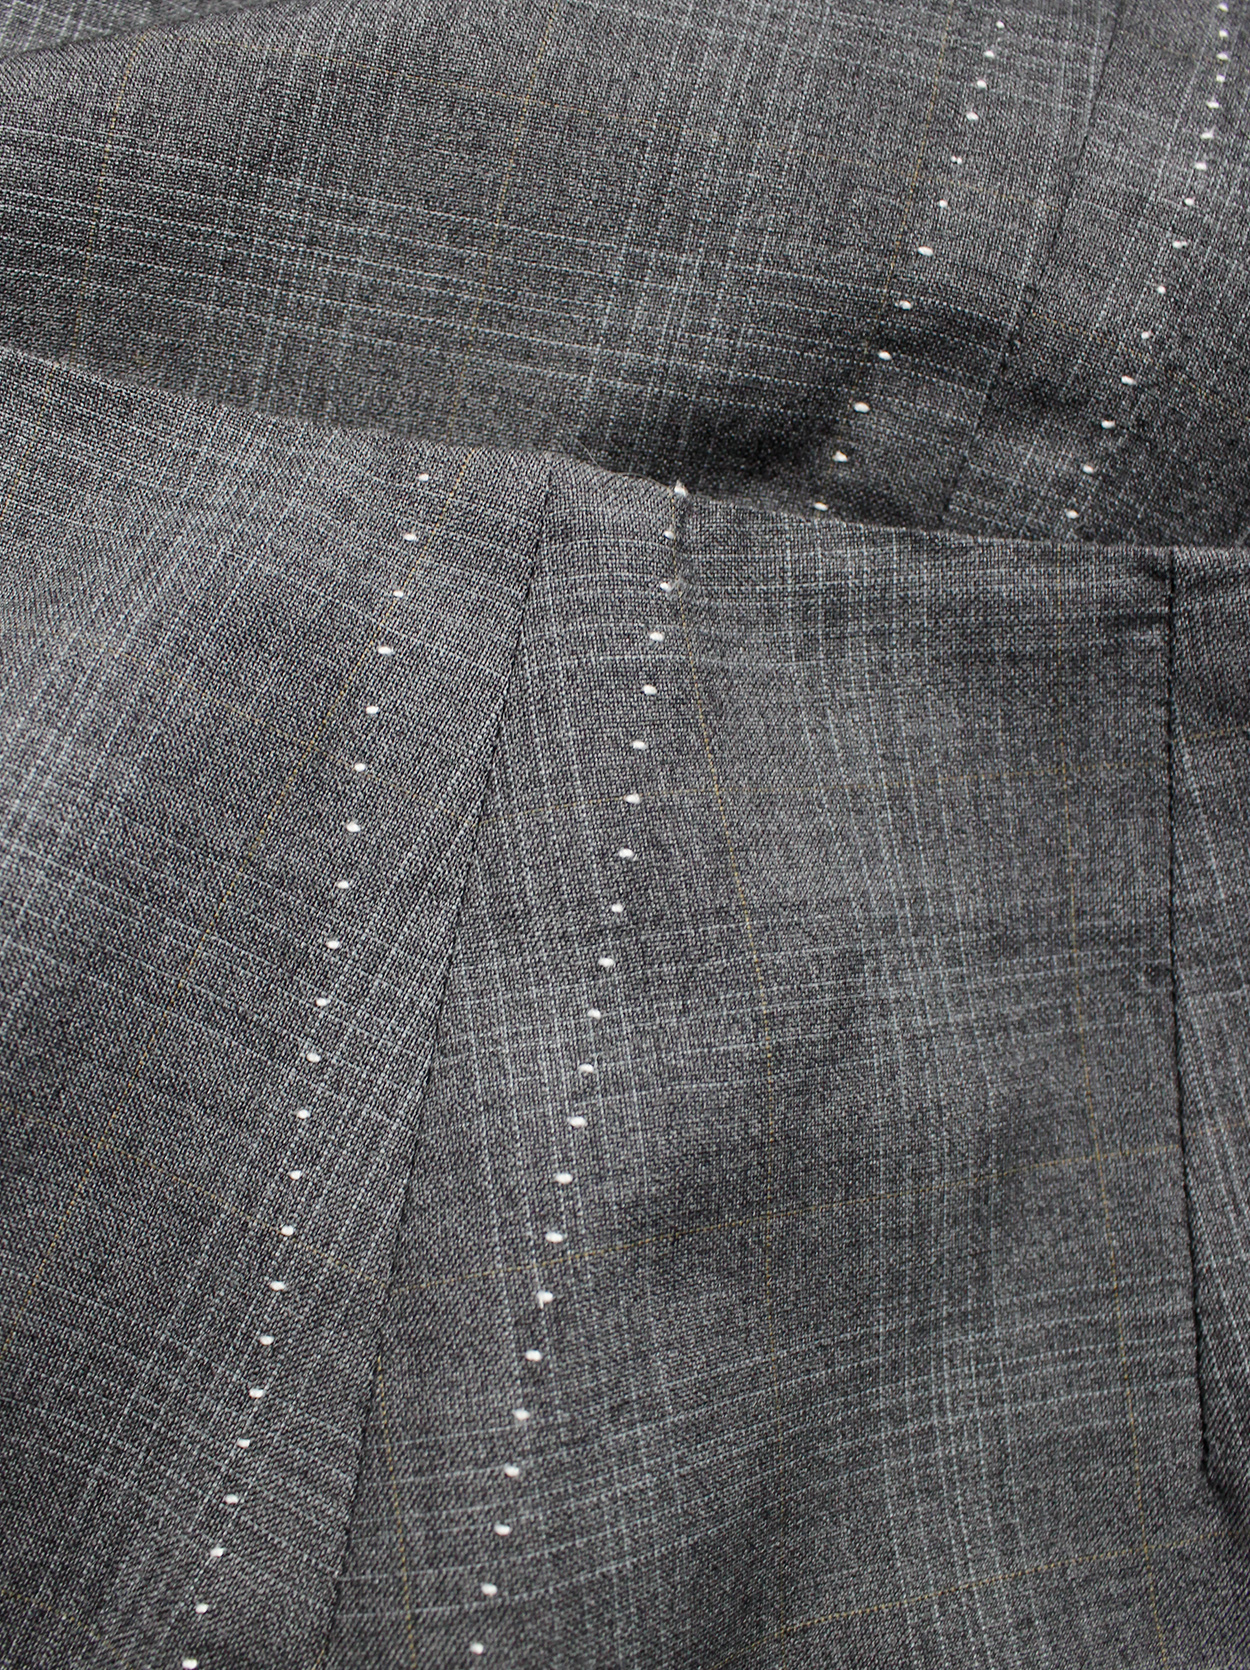 Maison Martin Margiela grey tartan skirt with exposed white stitches ...